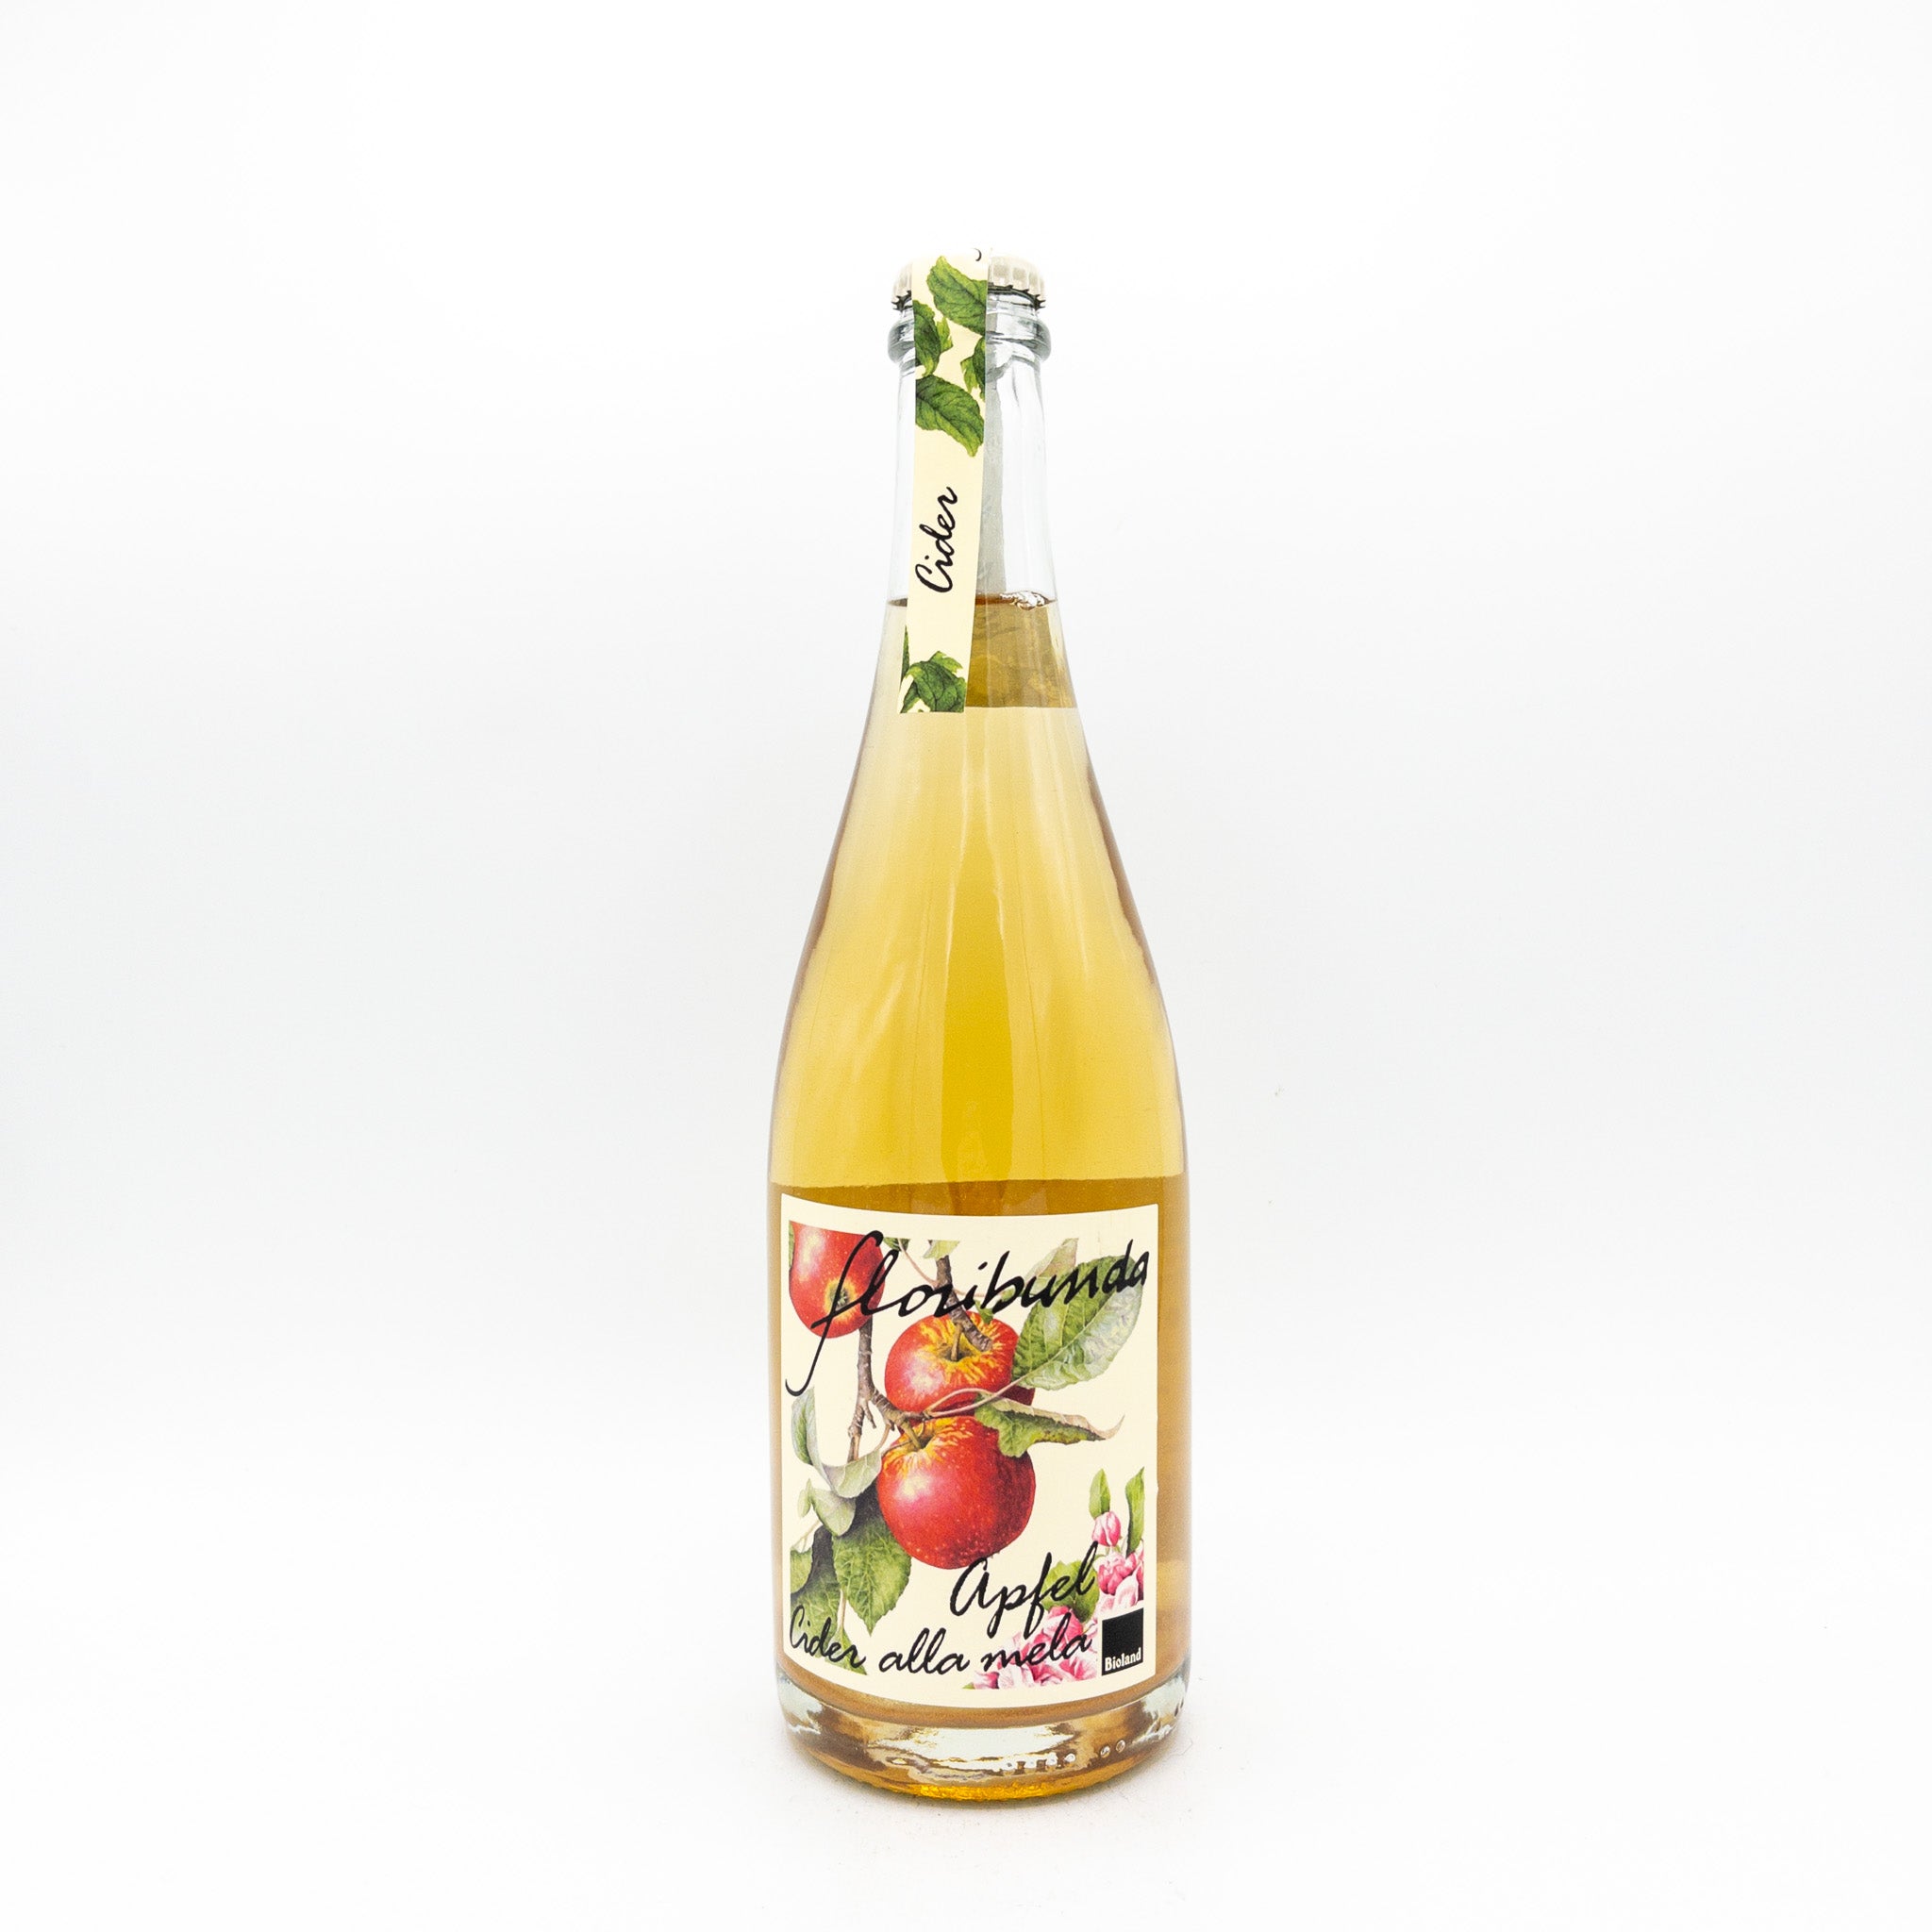 Floribunda 'Sparkling Apple Cider' NV